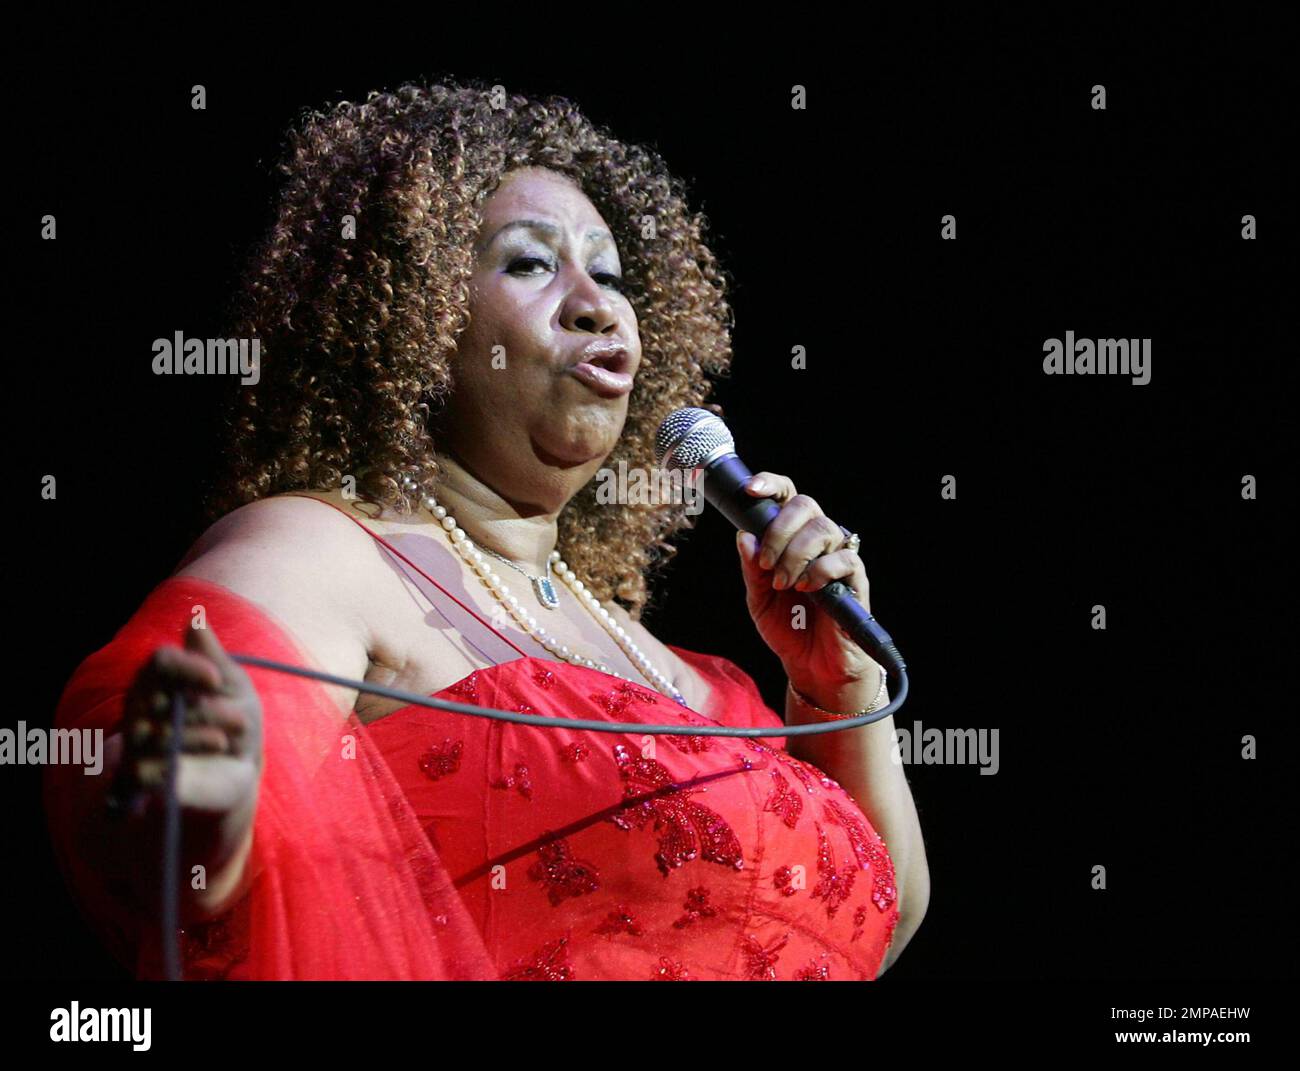 « The Queen of Soul », Aretha Franklin se produit en direct au Seminole Hard Rock Hotel & Casino. Hollywood, Floride. 03/16/10. Banque D'Images